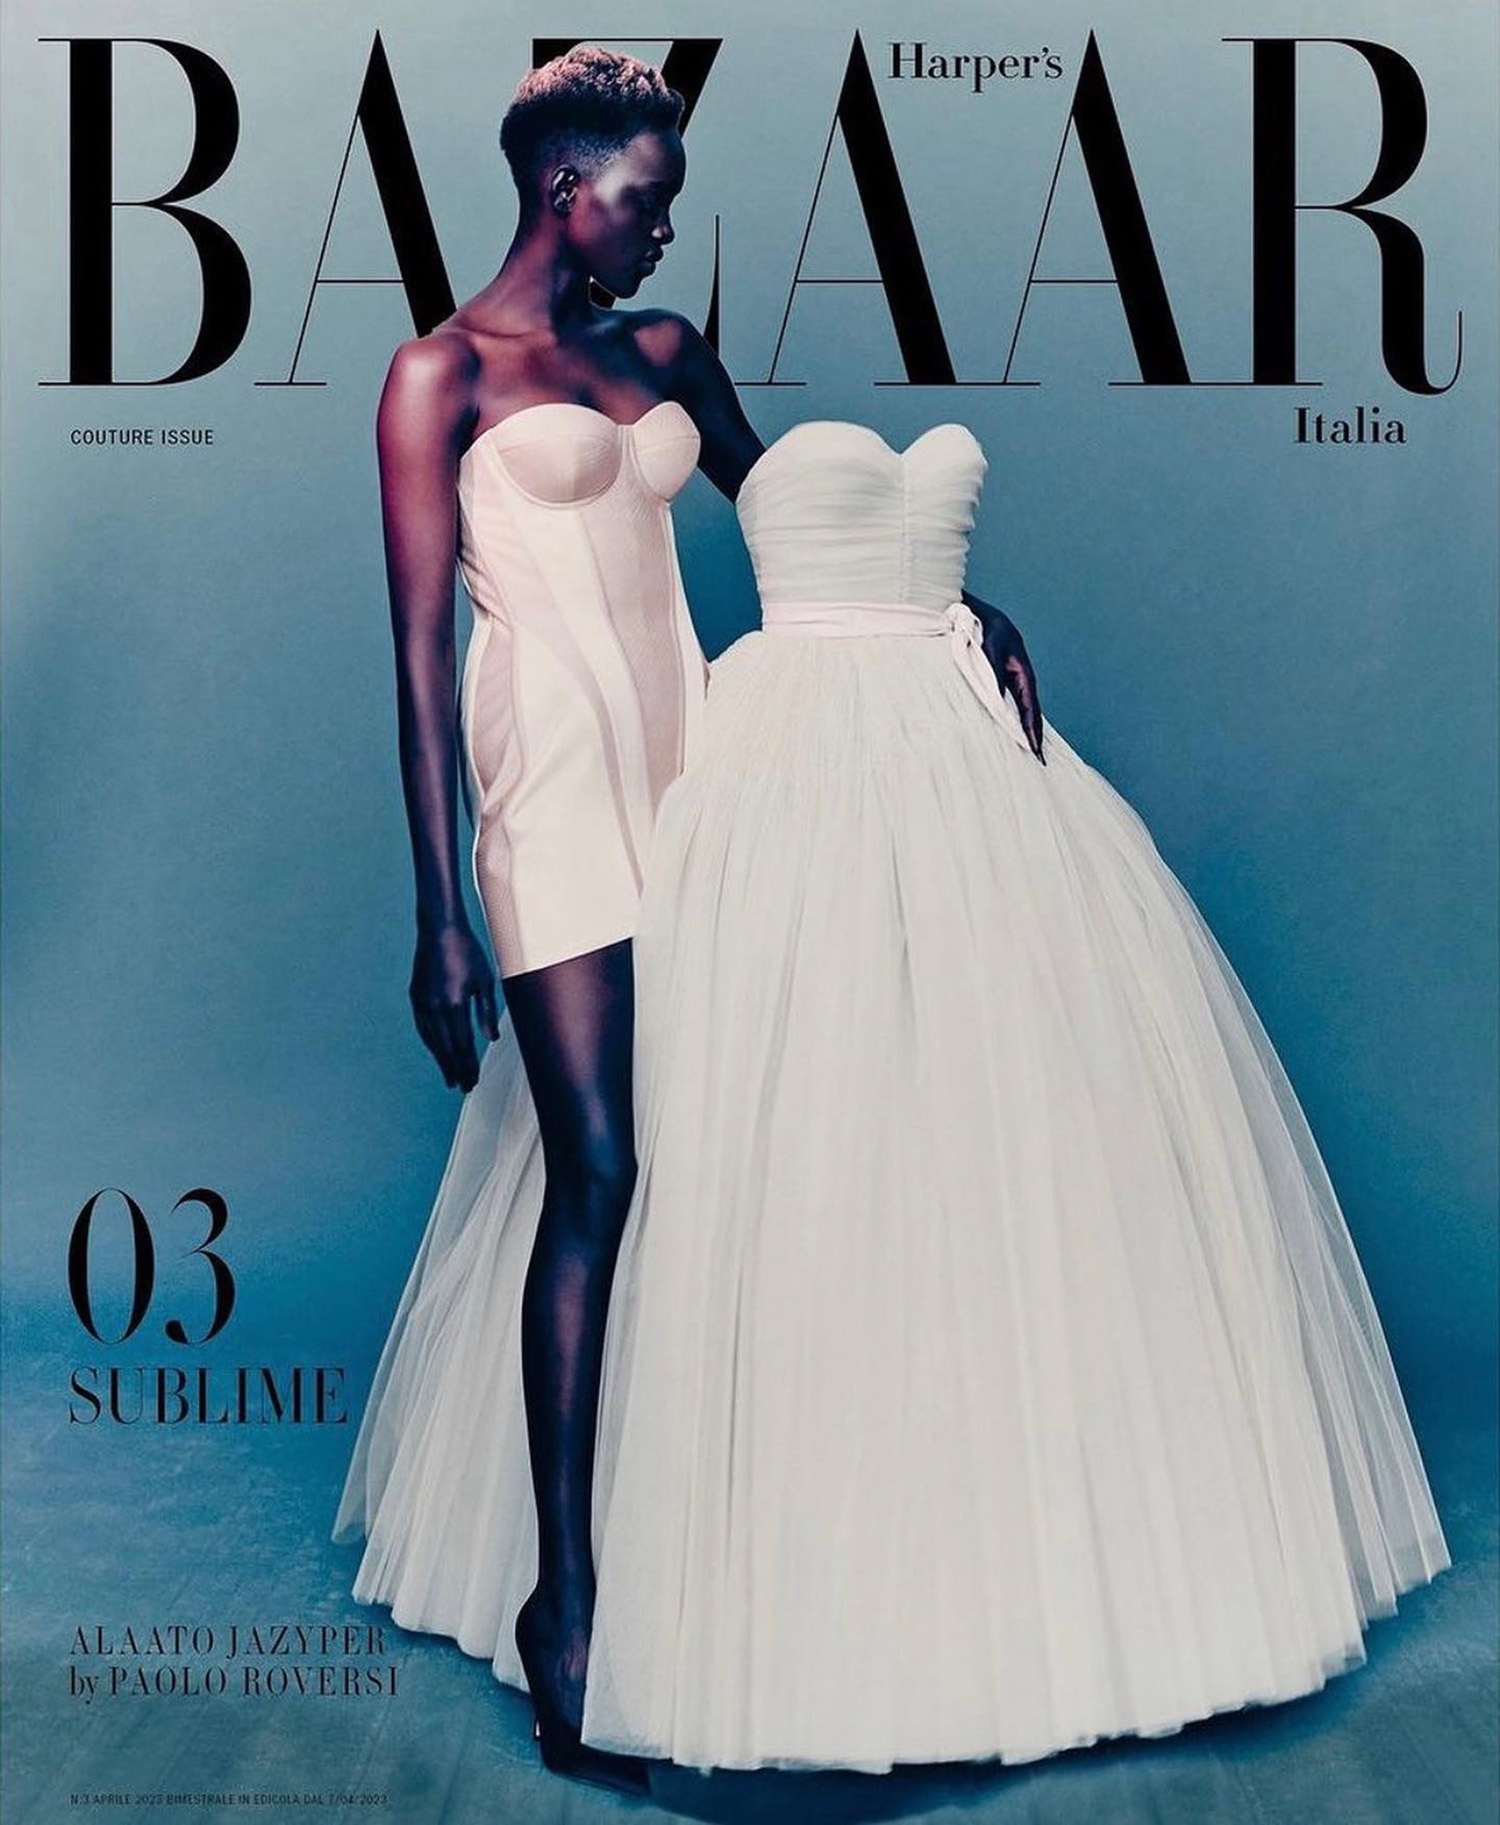 Alaato Jazyper Michael covers Bazaar - Roversi 2023 by April/May Italia Paolo Harper\'s fashionotography